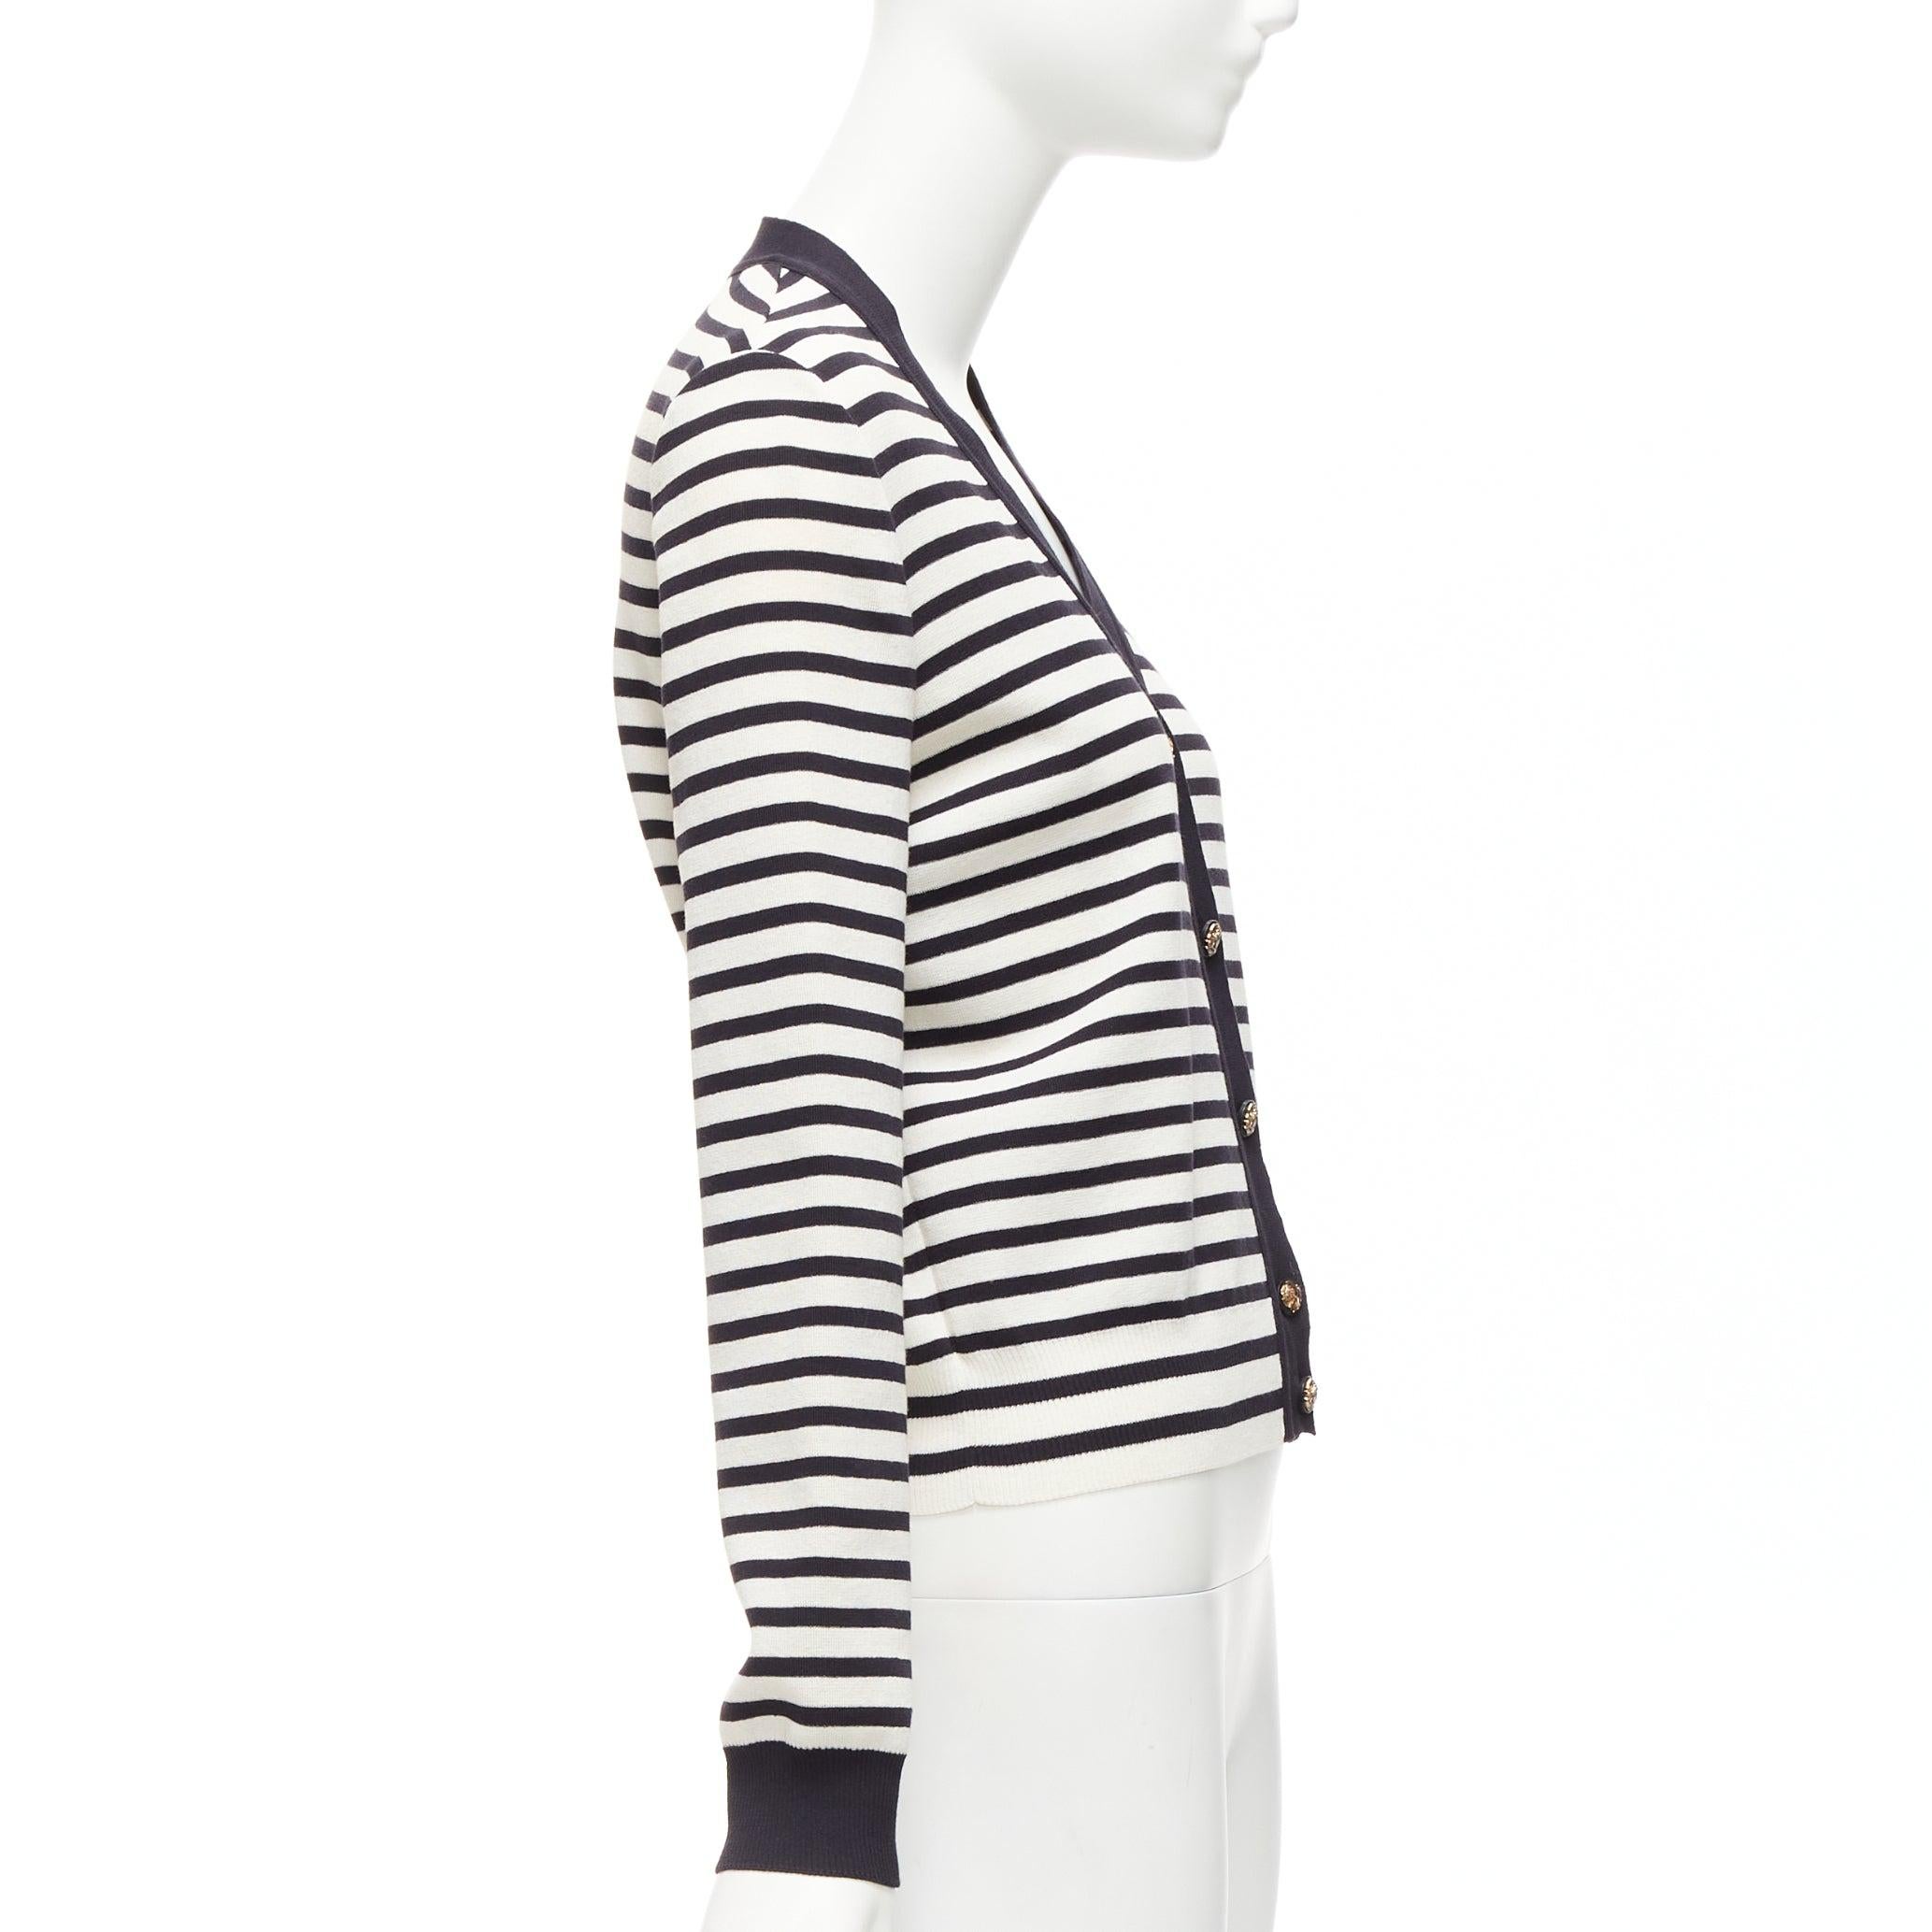 CHANEL black white striped cotton blend gold CC buttons cardigan FR38 M For Sale 1